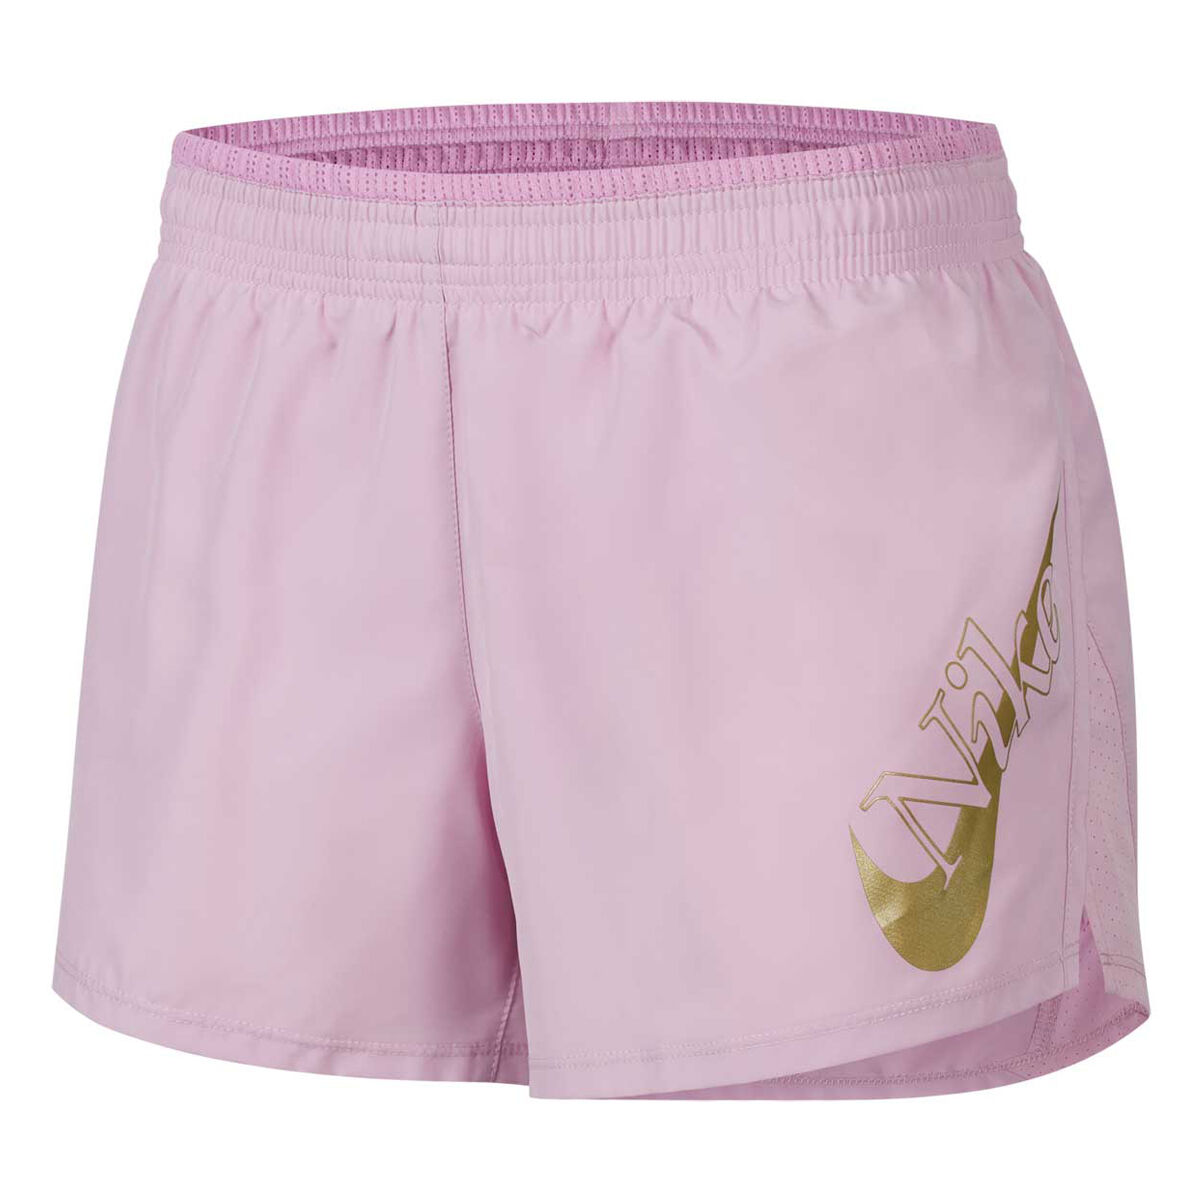 womens pink nike shorts